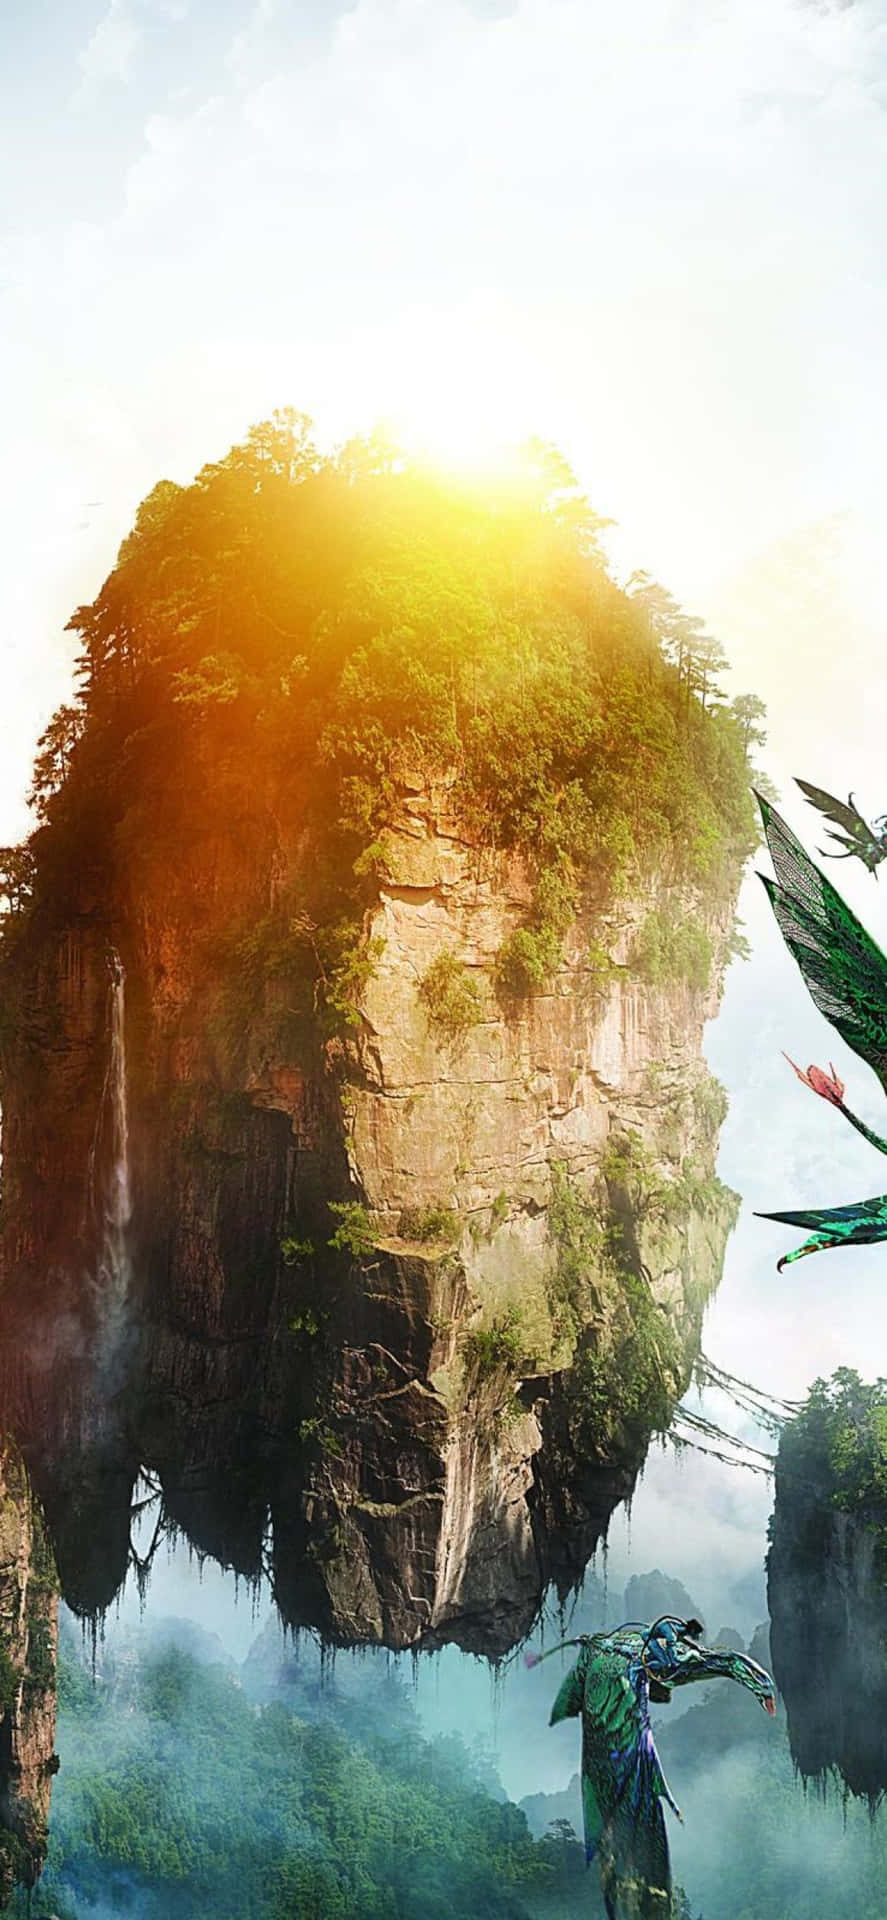 Avatar Frontiers of Pandora HD Wallpapers  4K Backgrounds  Wallpapers Den